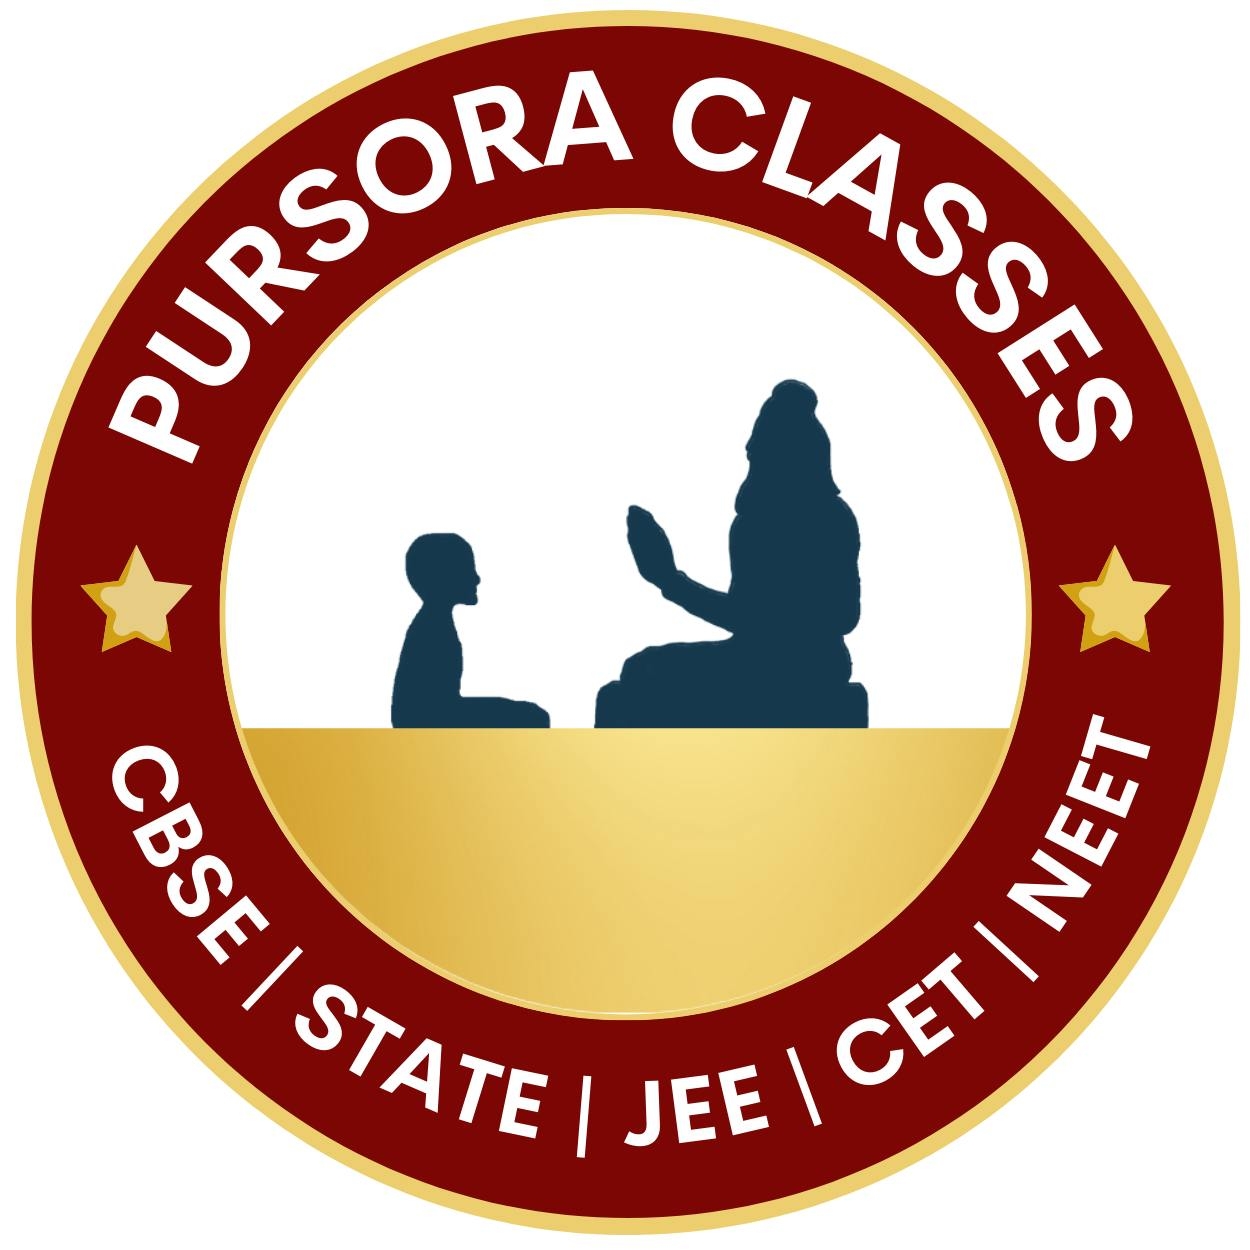 Pursora Classes